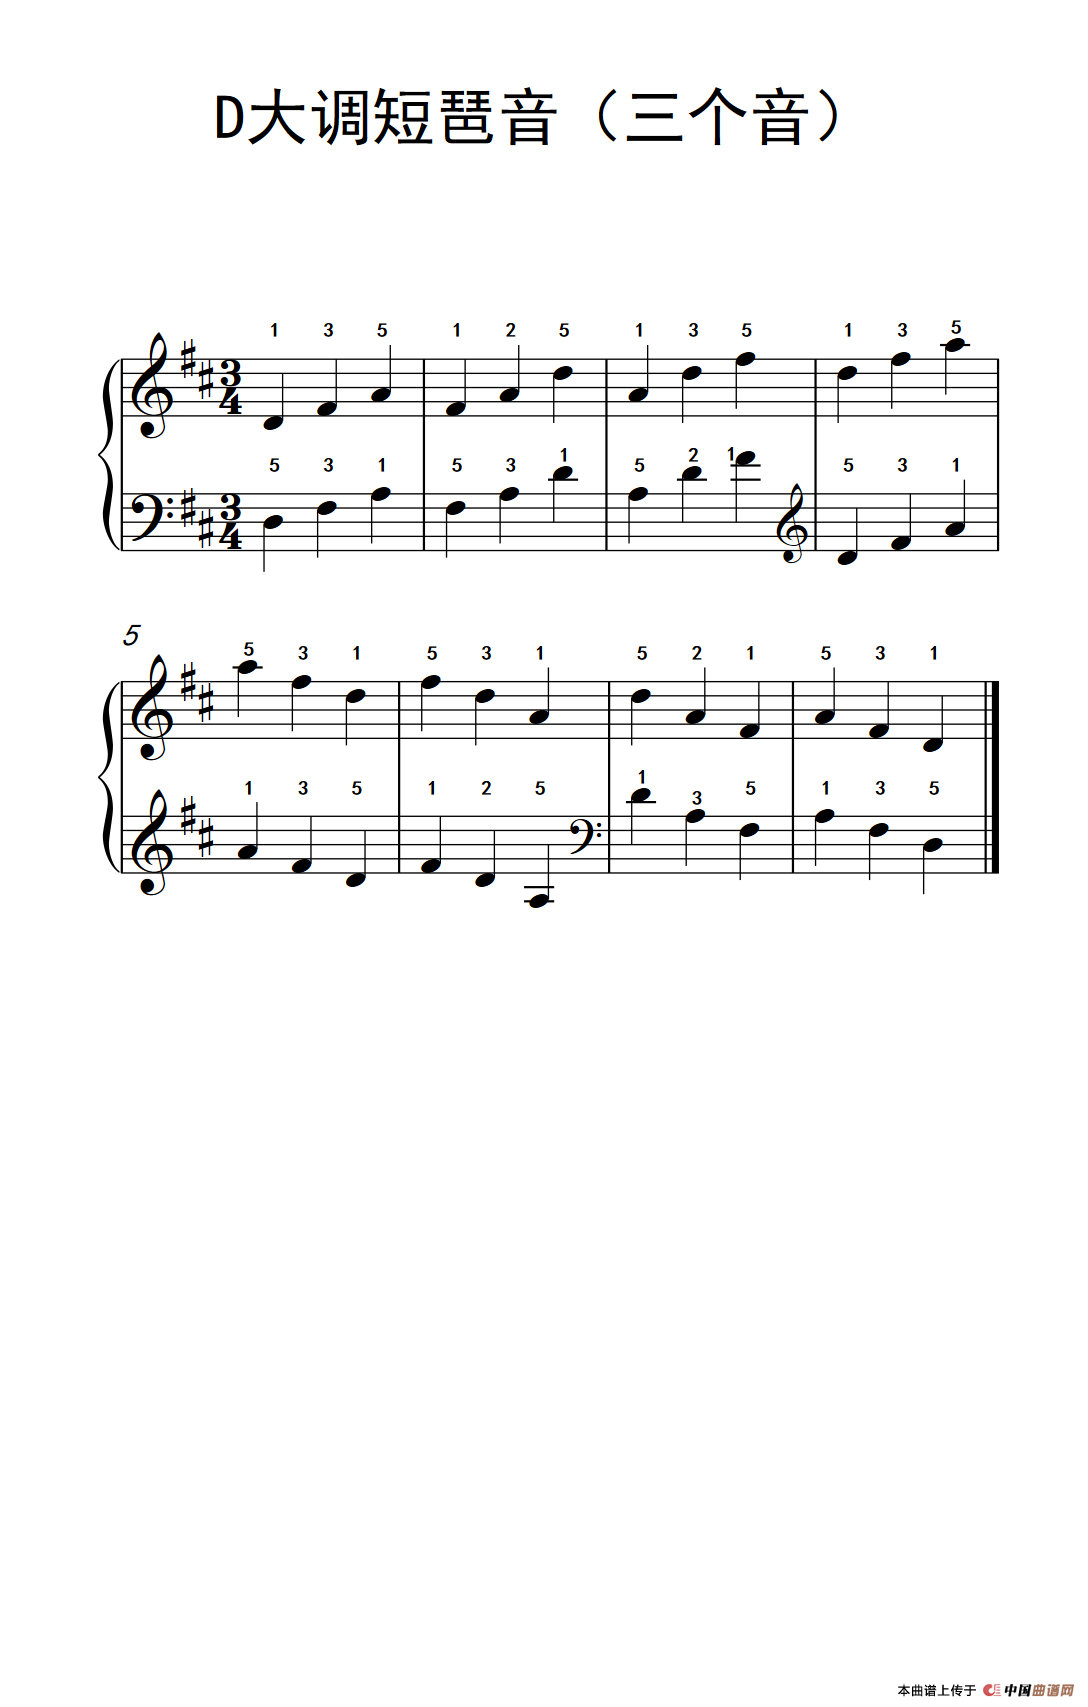 d大调短琶音(三个音)(儿童钢琴练习曲)图片